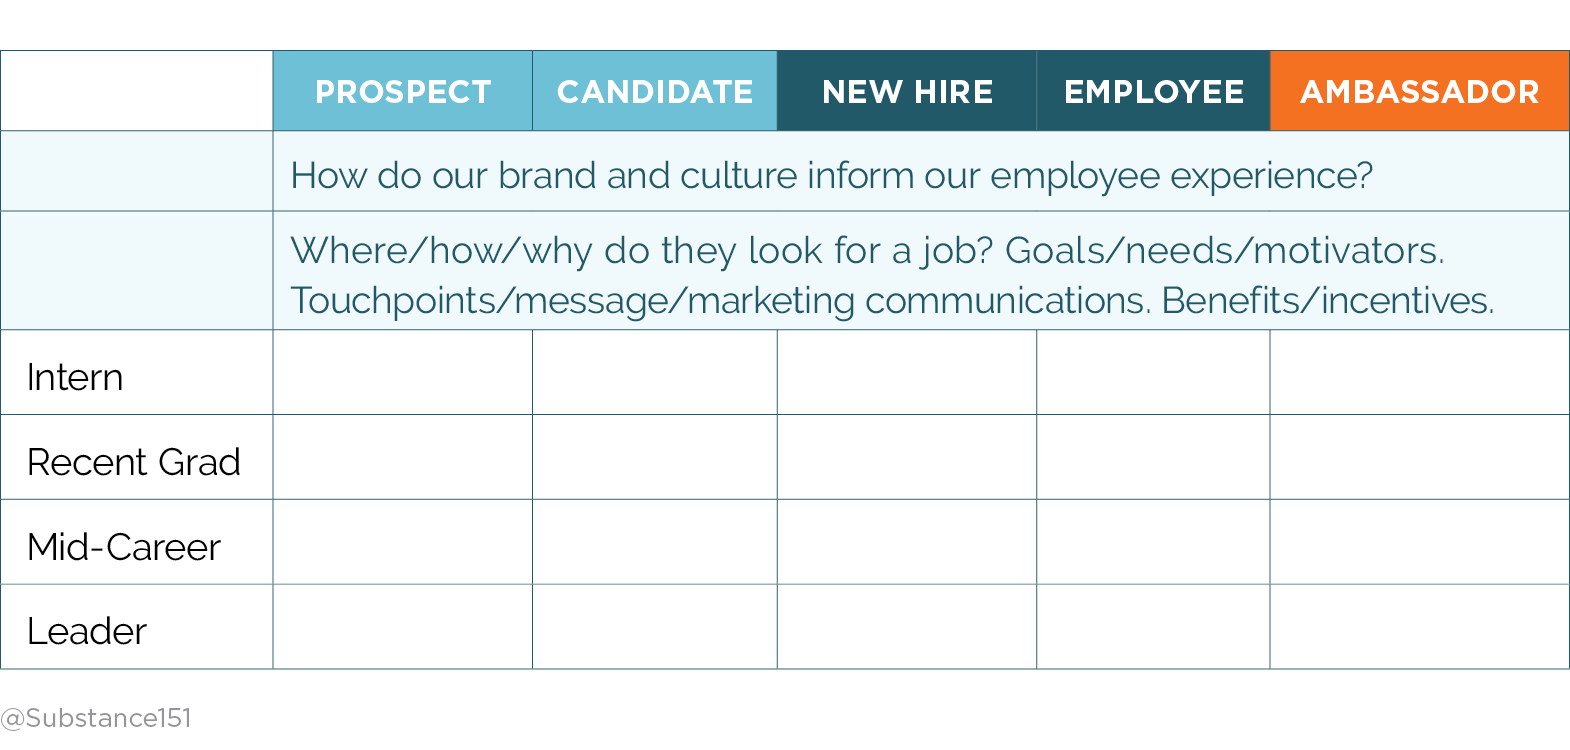 candidate and employee personas segmentation